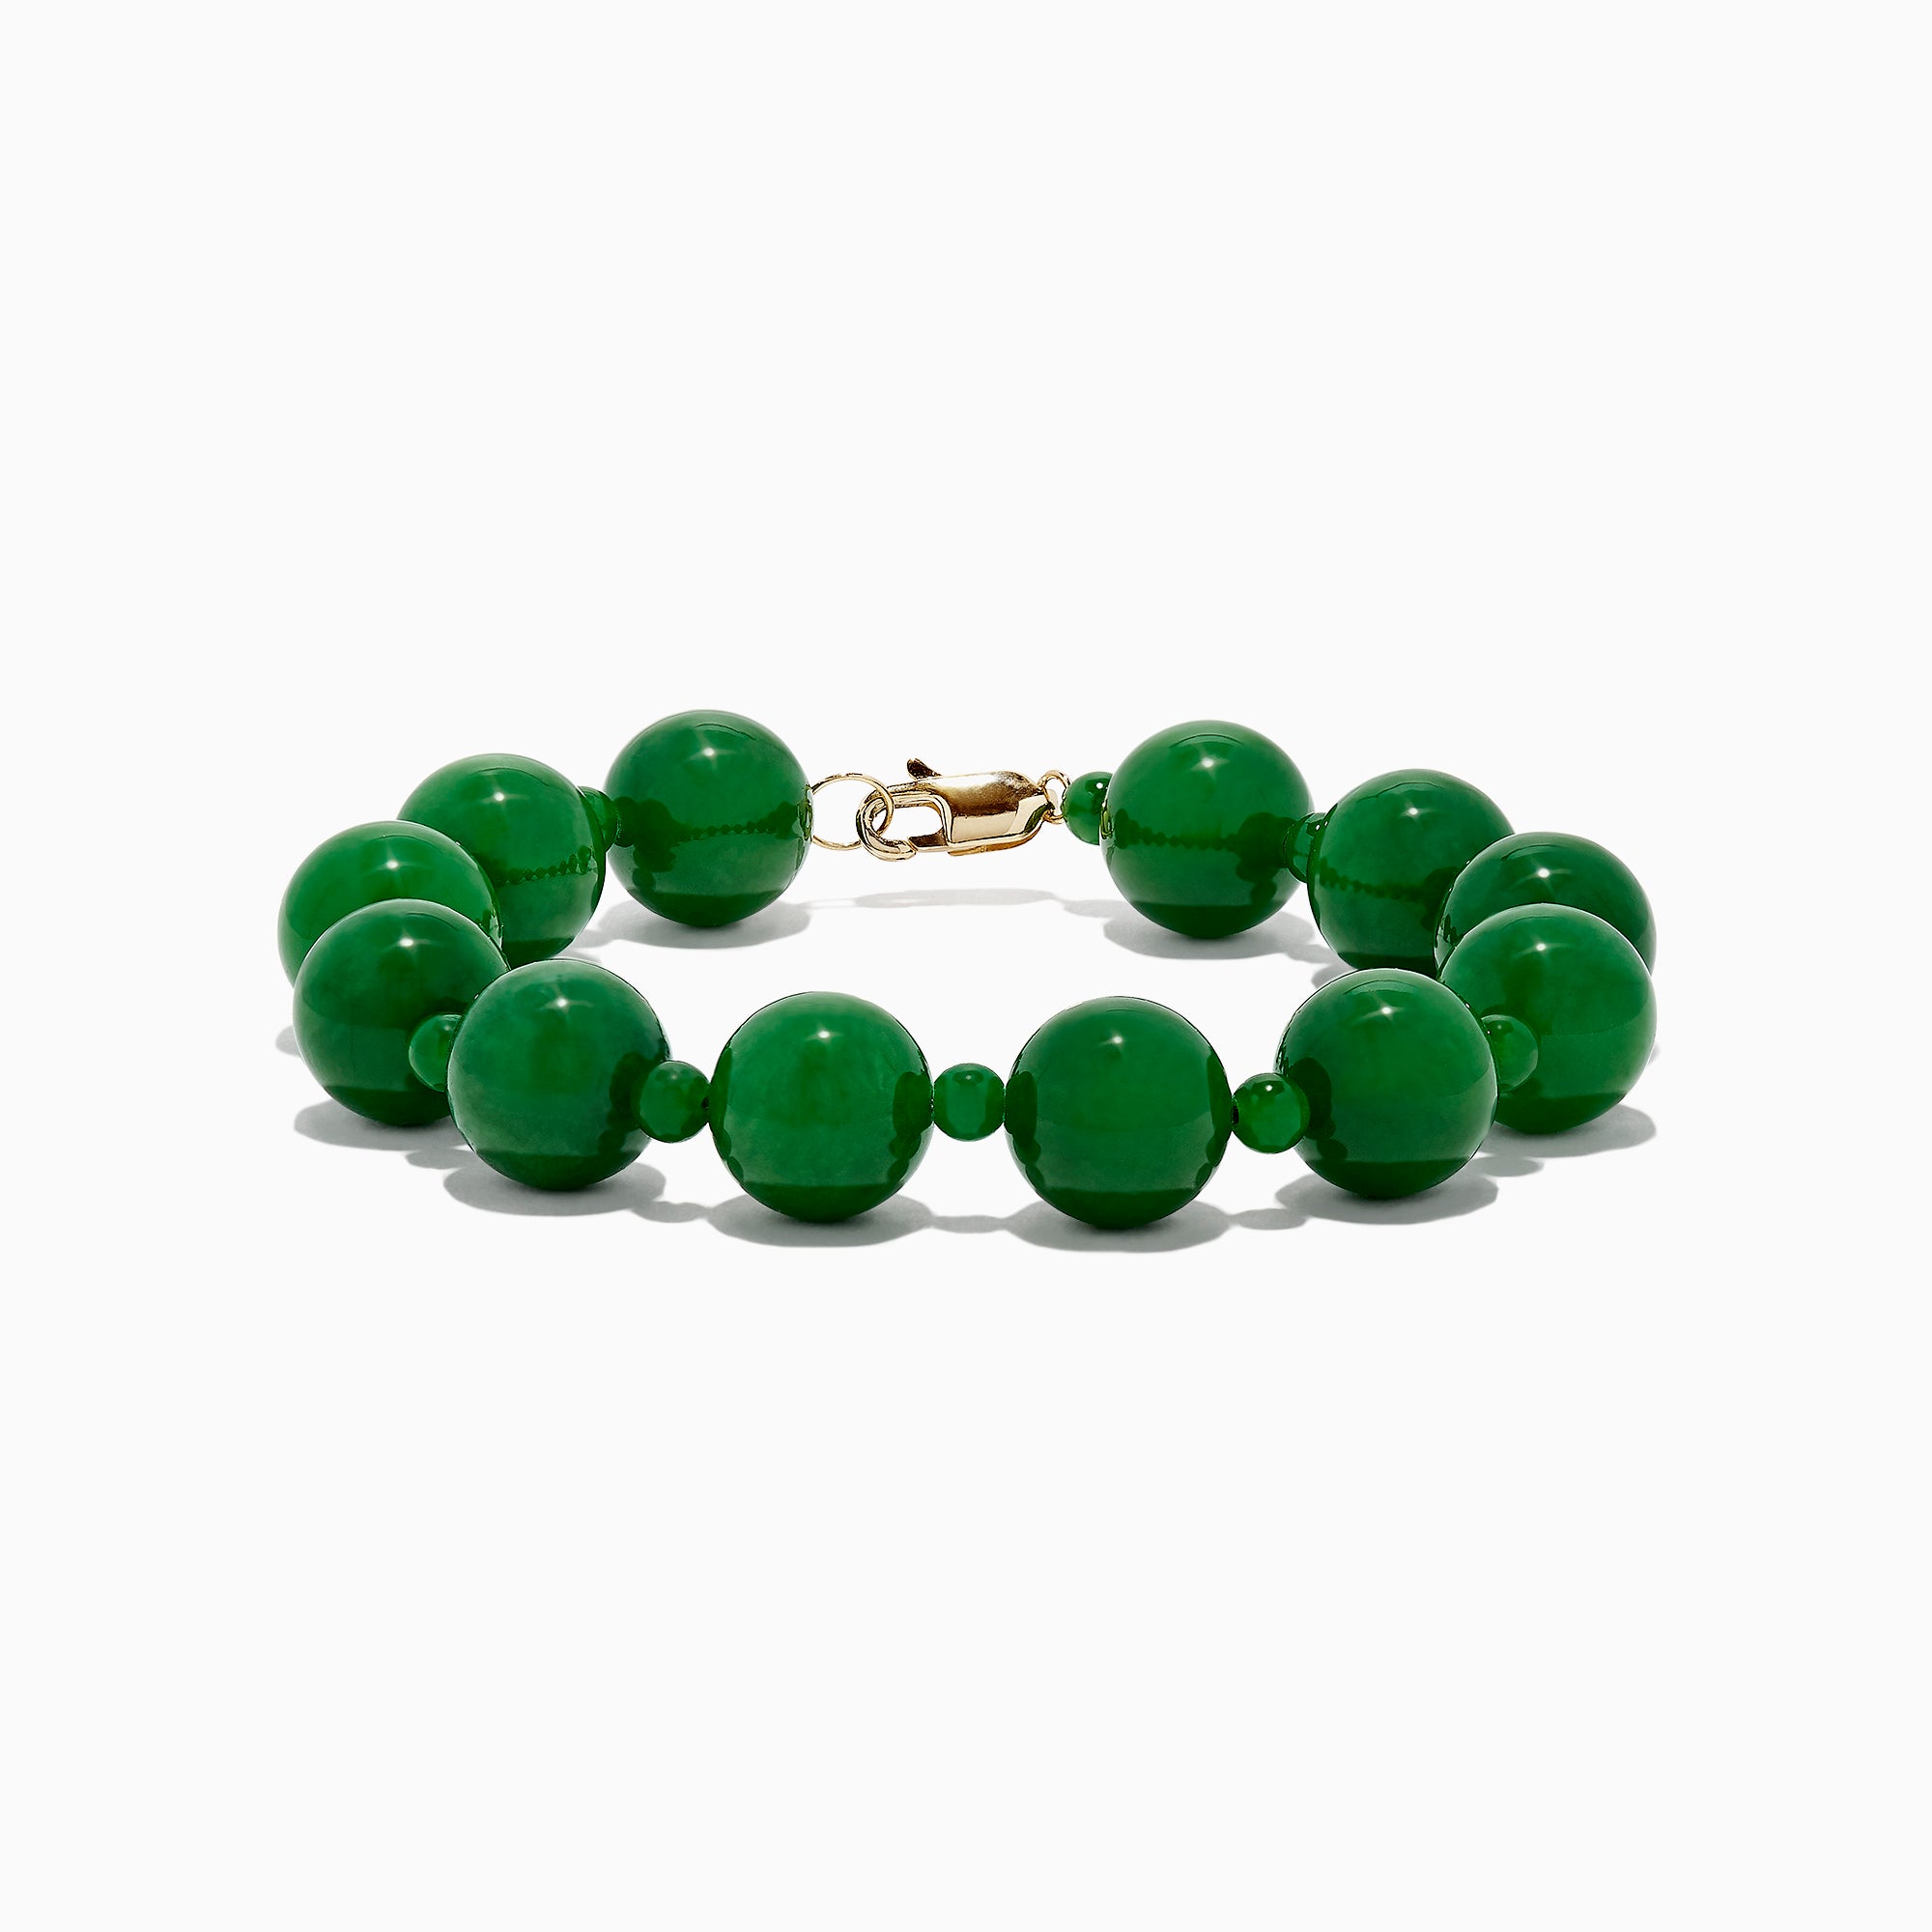 Genuine High-quality Jade Jadeite Bracelet Bangle with 24k Yellow Gold  Submarine Charm Colorful #403 | Jade Jewelry, Nephrite Jade Jewelry |  RealJade, Authenticity is Timeless – RealJade® Co.